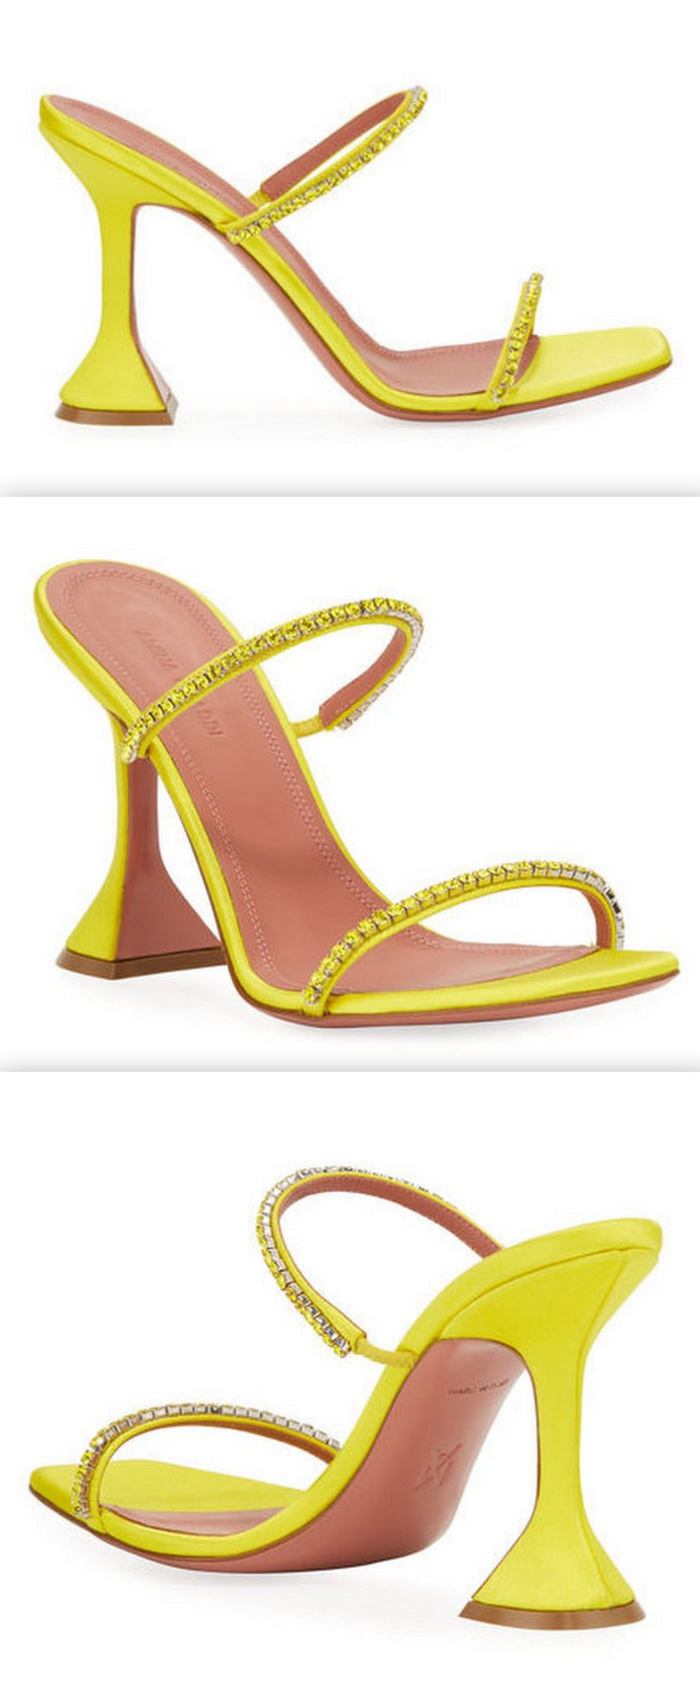 'Gilda' Satin Slipper Sandals, Yellow